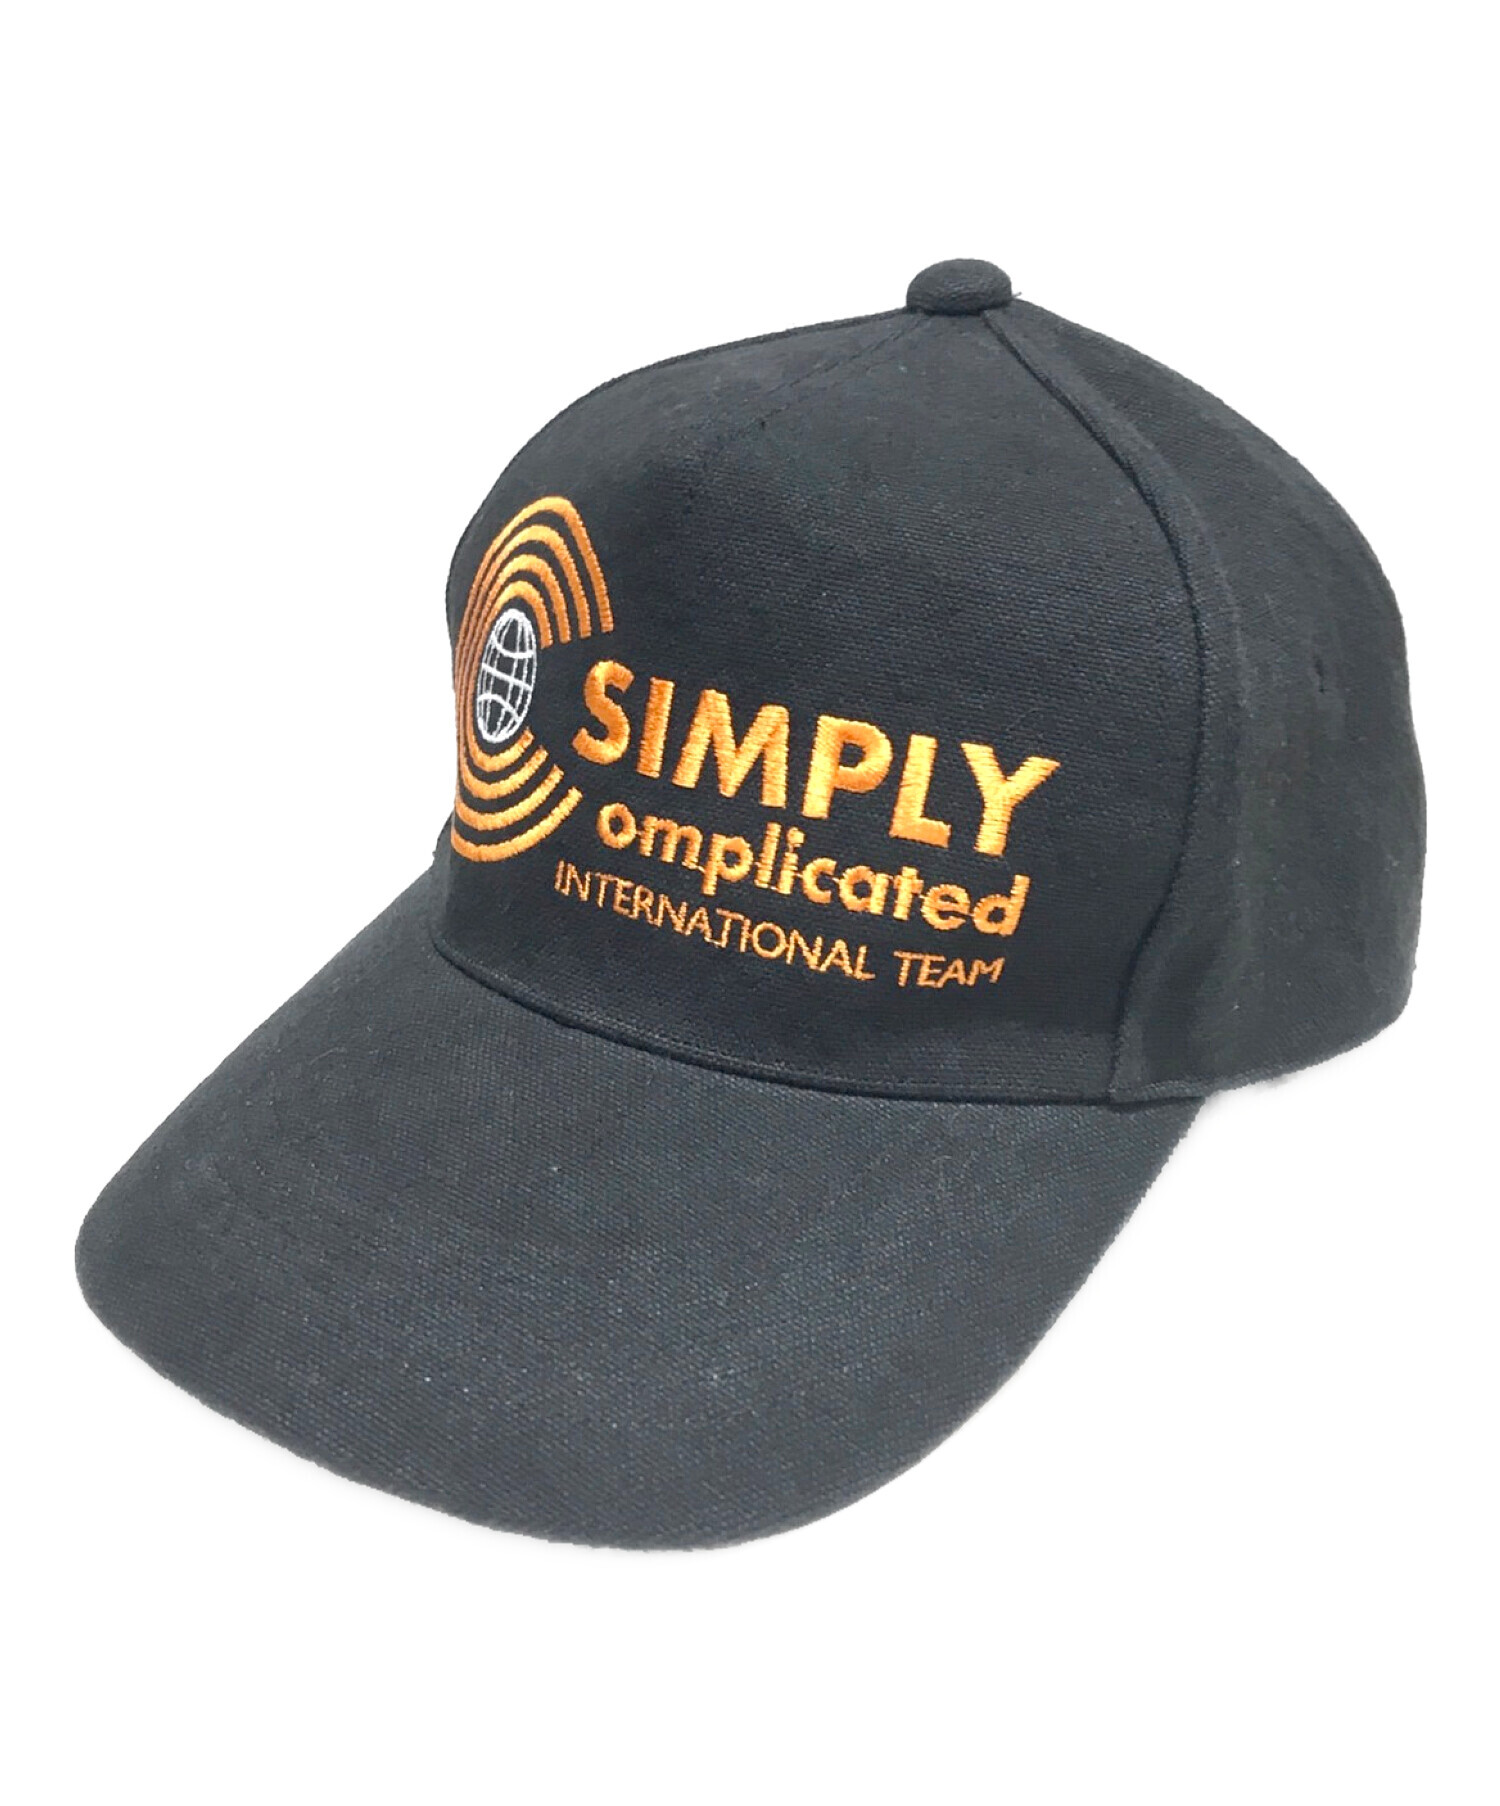 Simply complicated cap | kensysgas.com